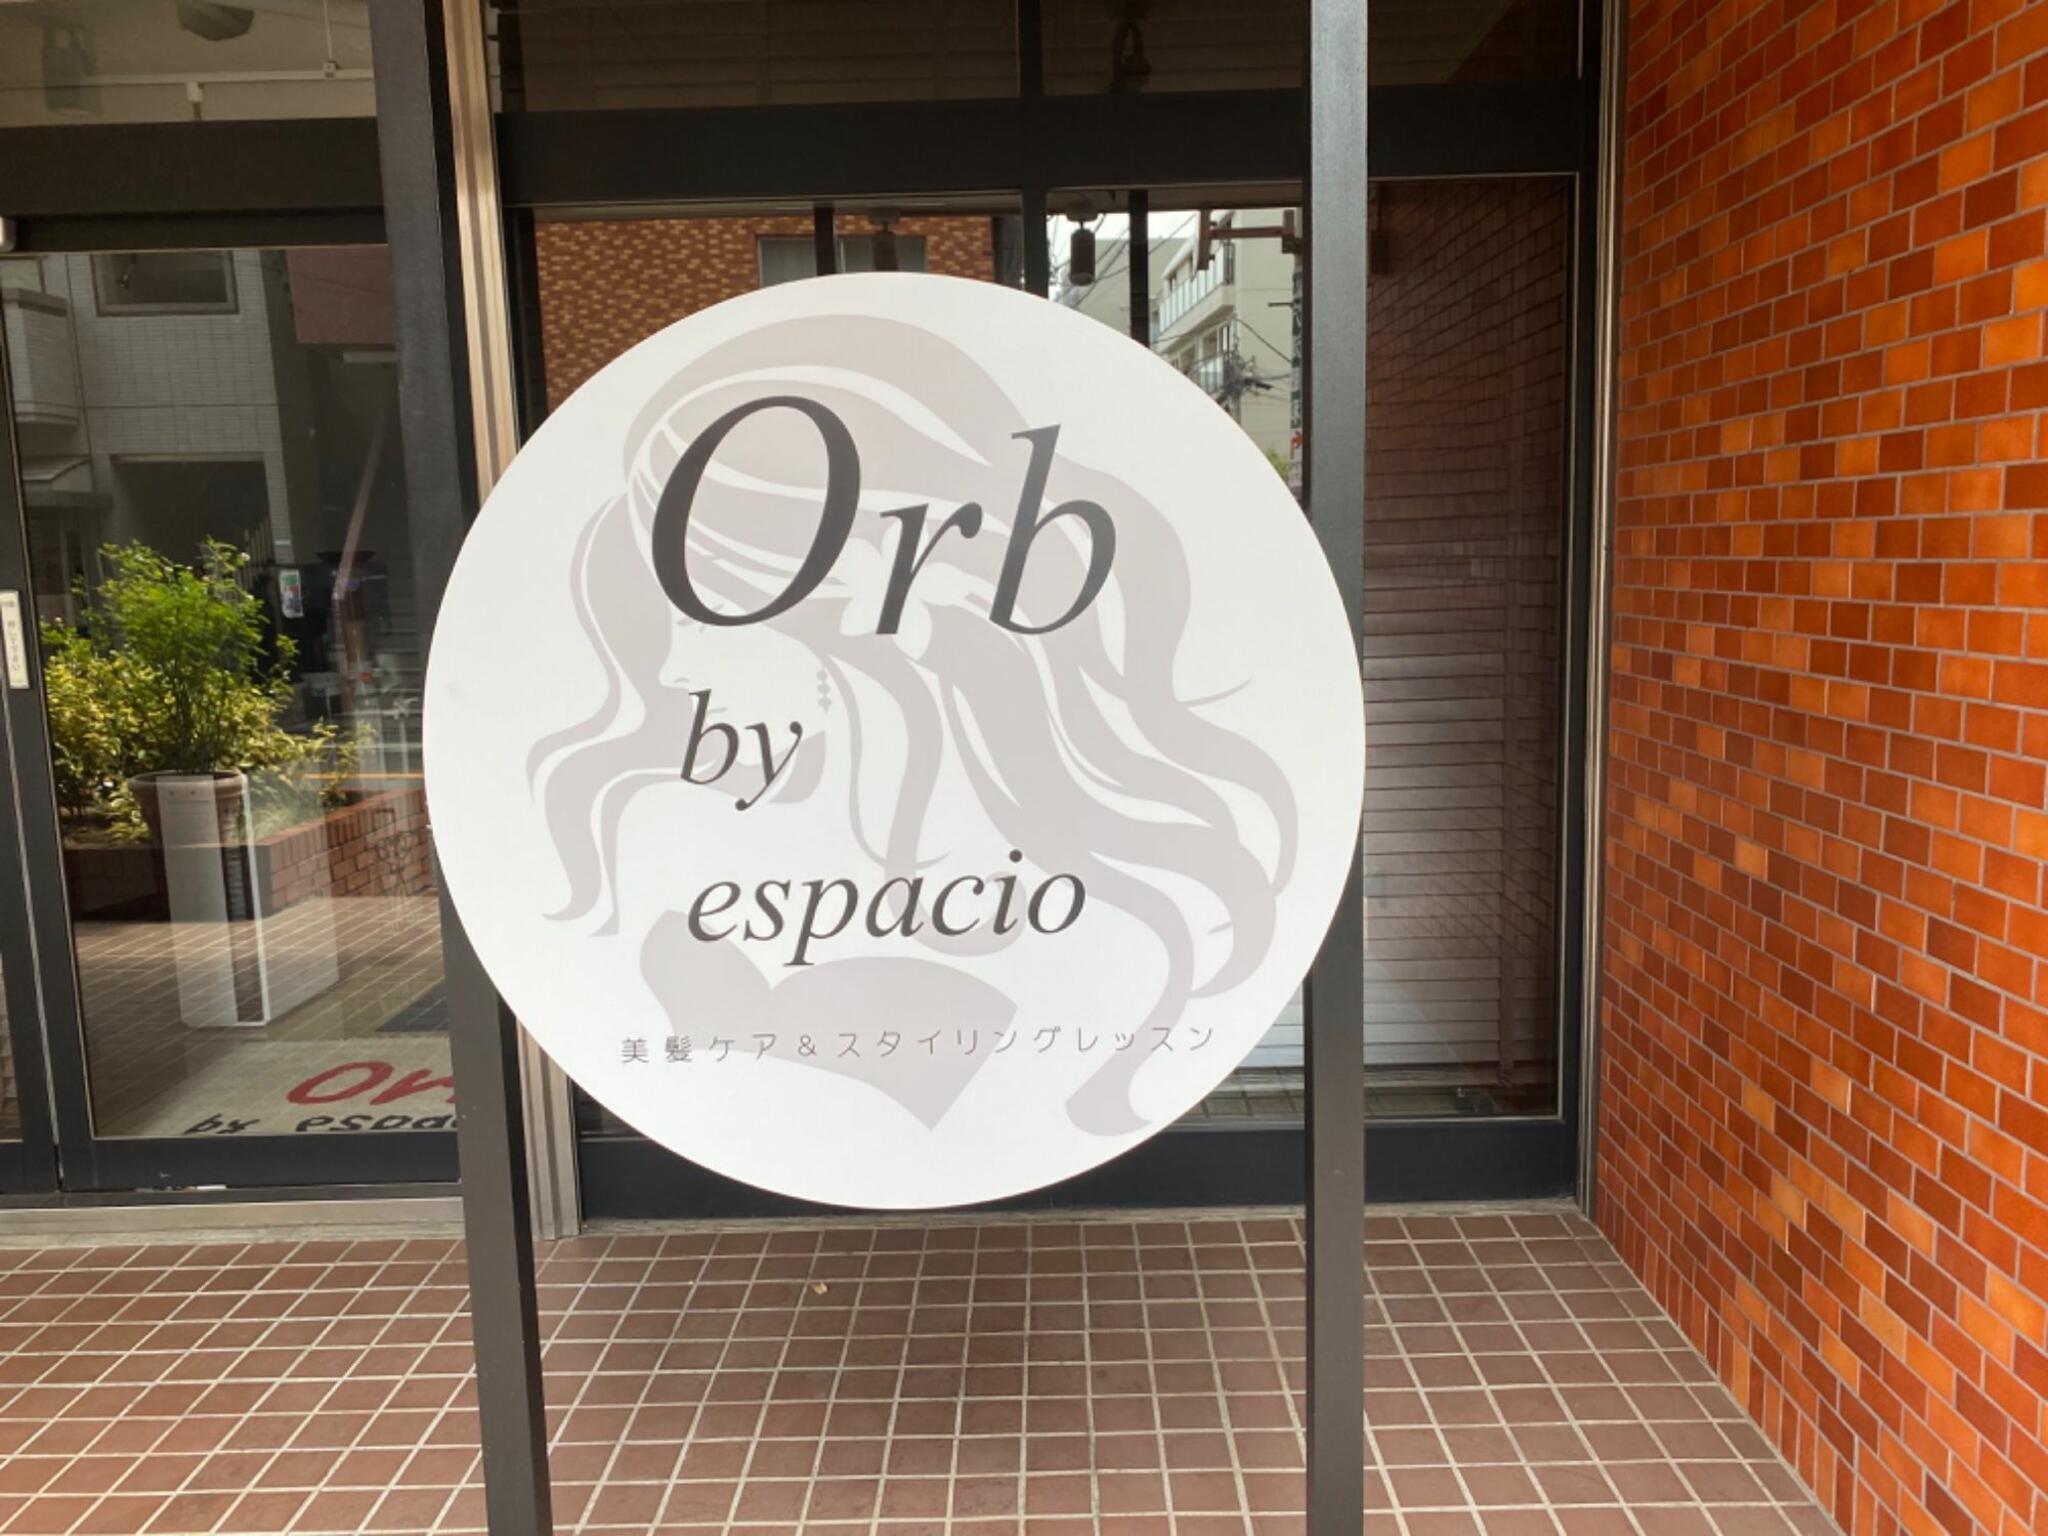 Orb by espacioの代表写真1